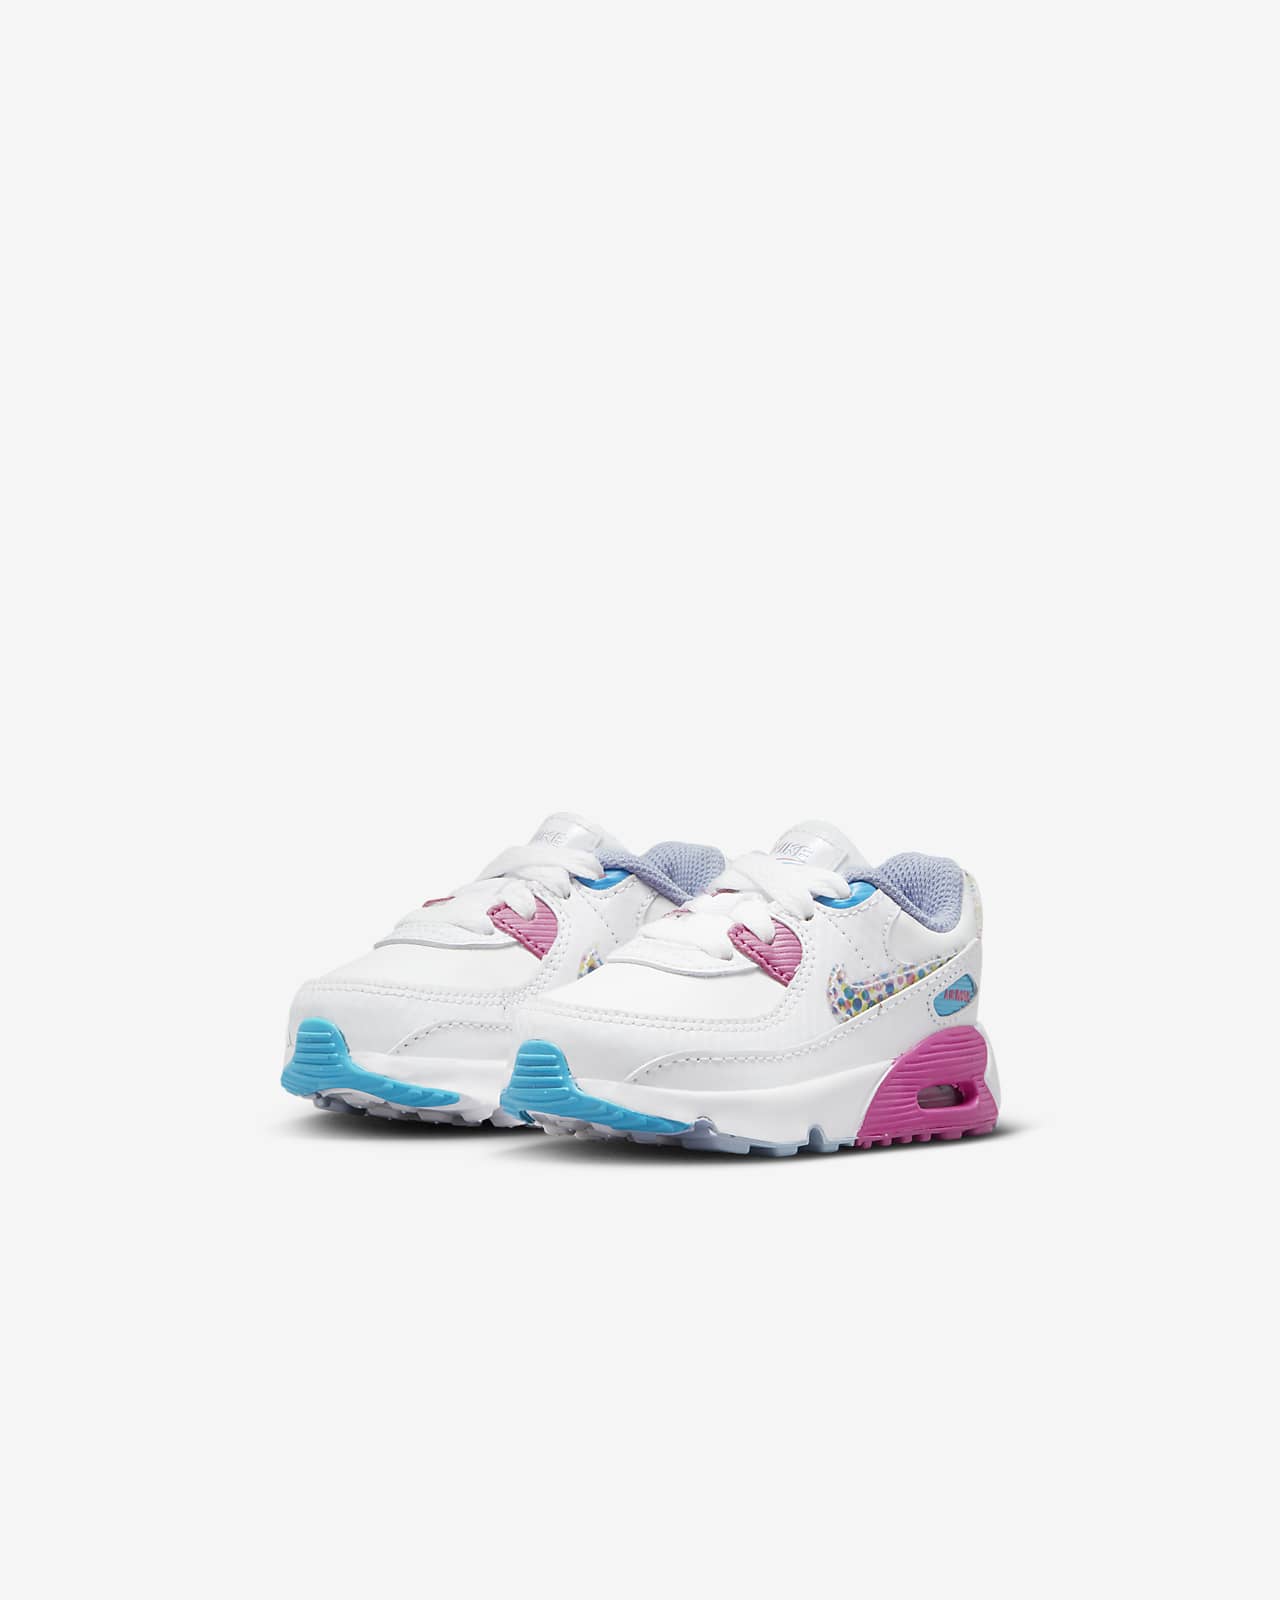 Nike Air Max 90 SE Baby/Toddler Shoes.